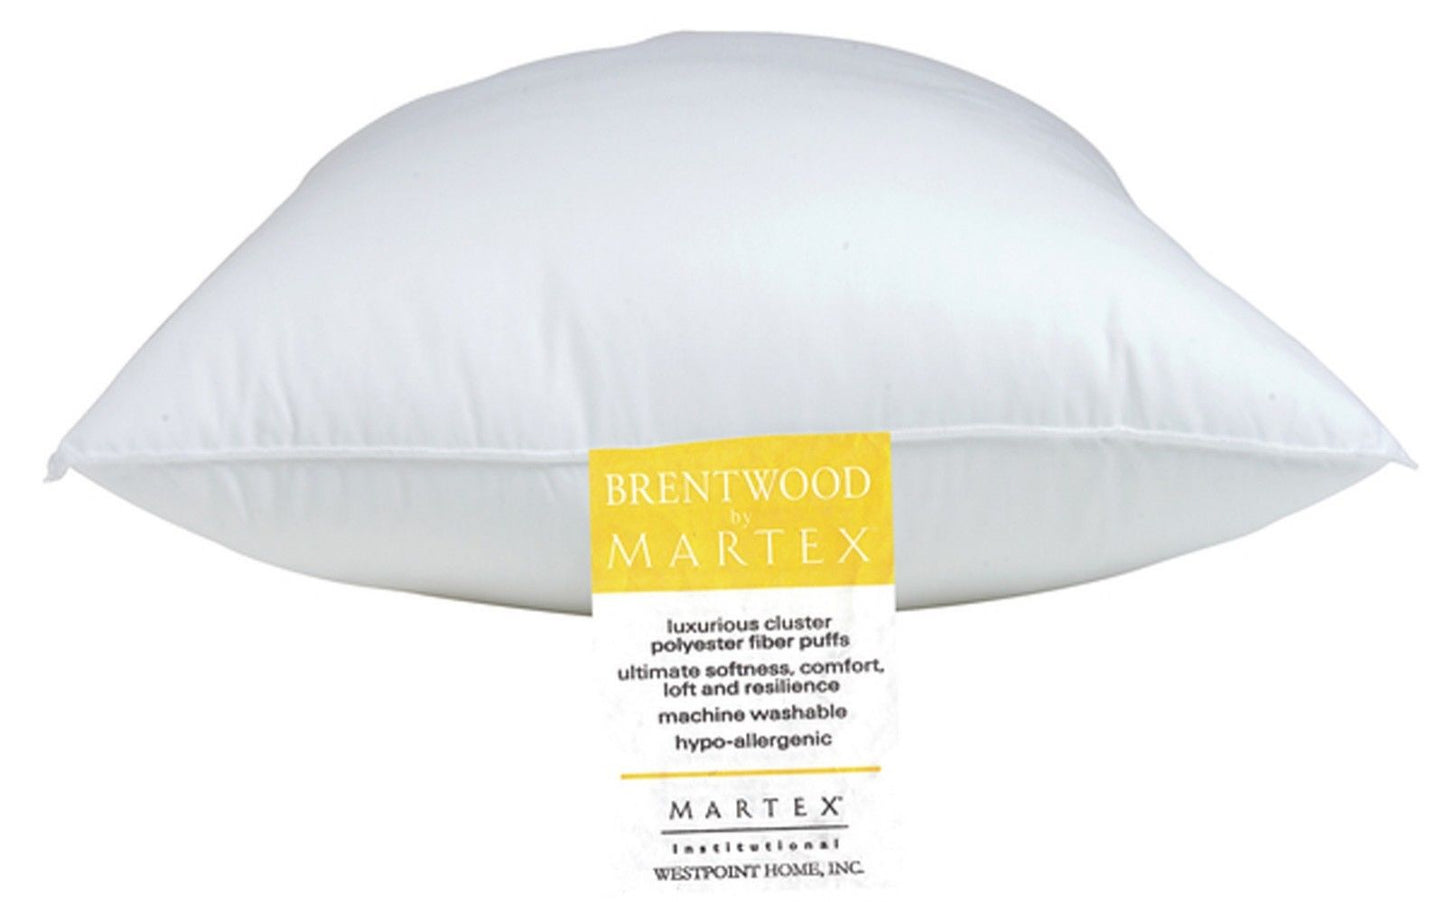 Martex Brentwood Gold Label Queen Homewood Suites Hotel Pillow